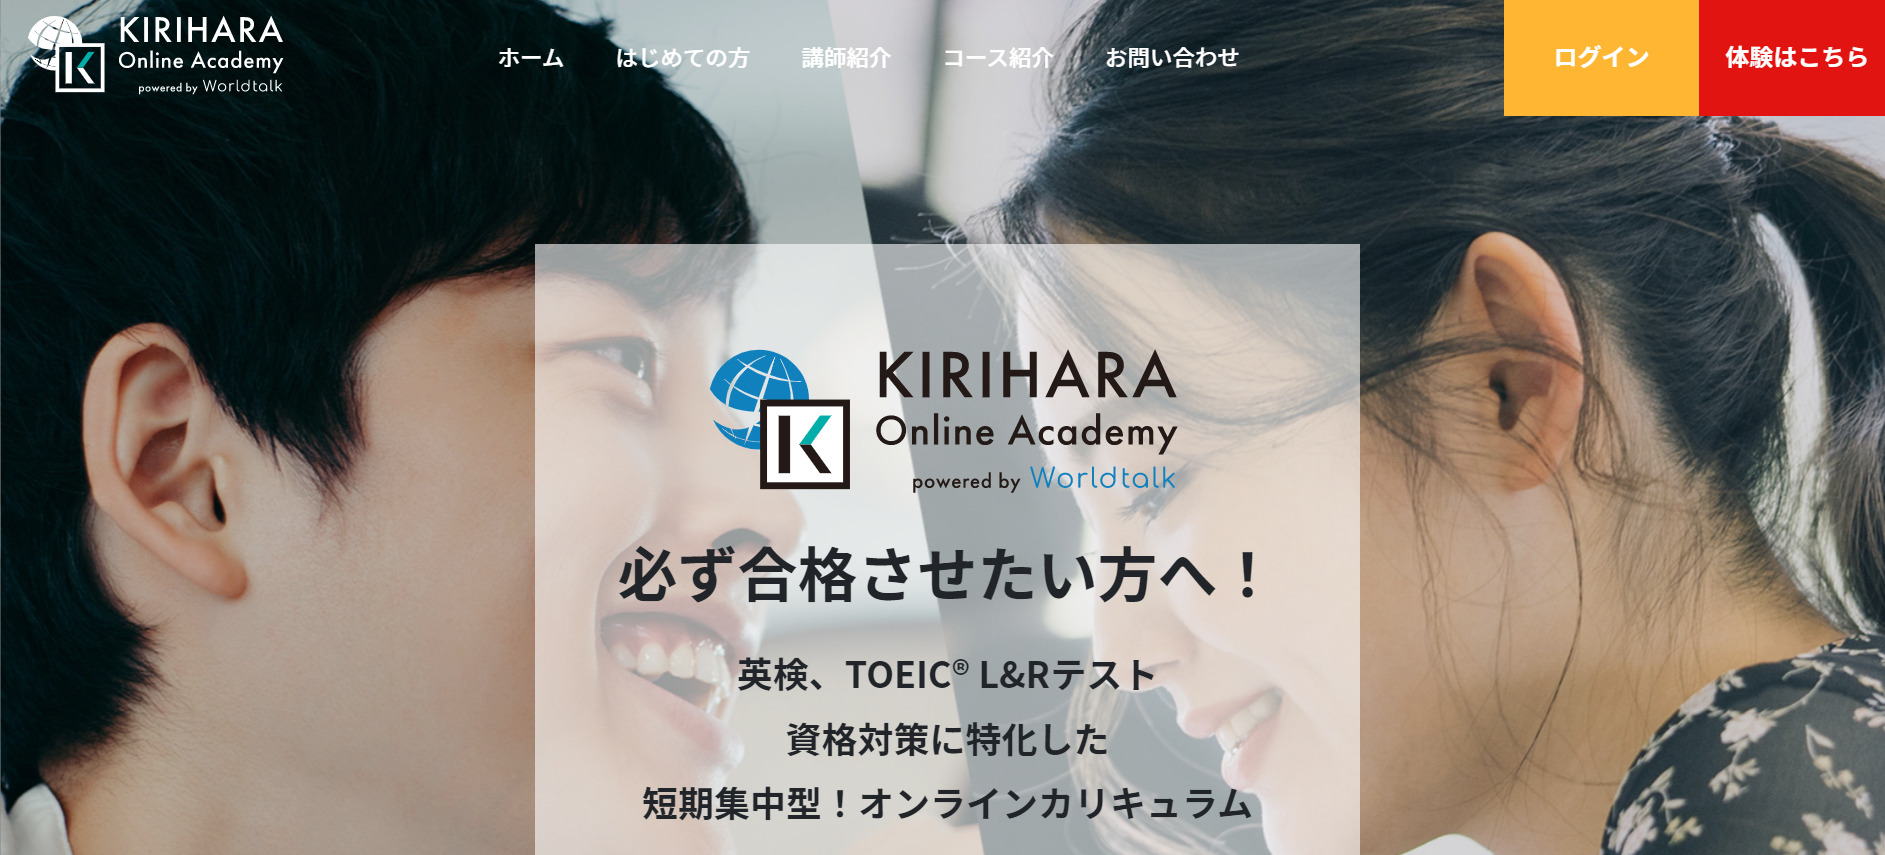 KIRIHARA Online Academyのトップページ